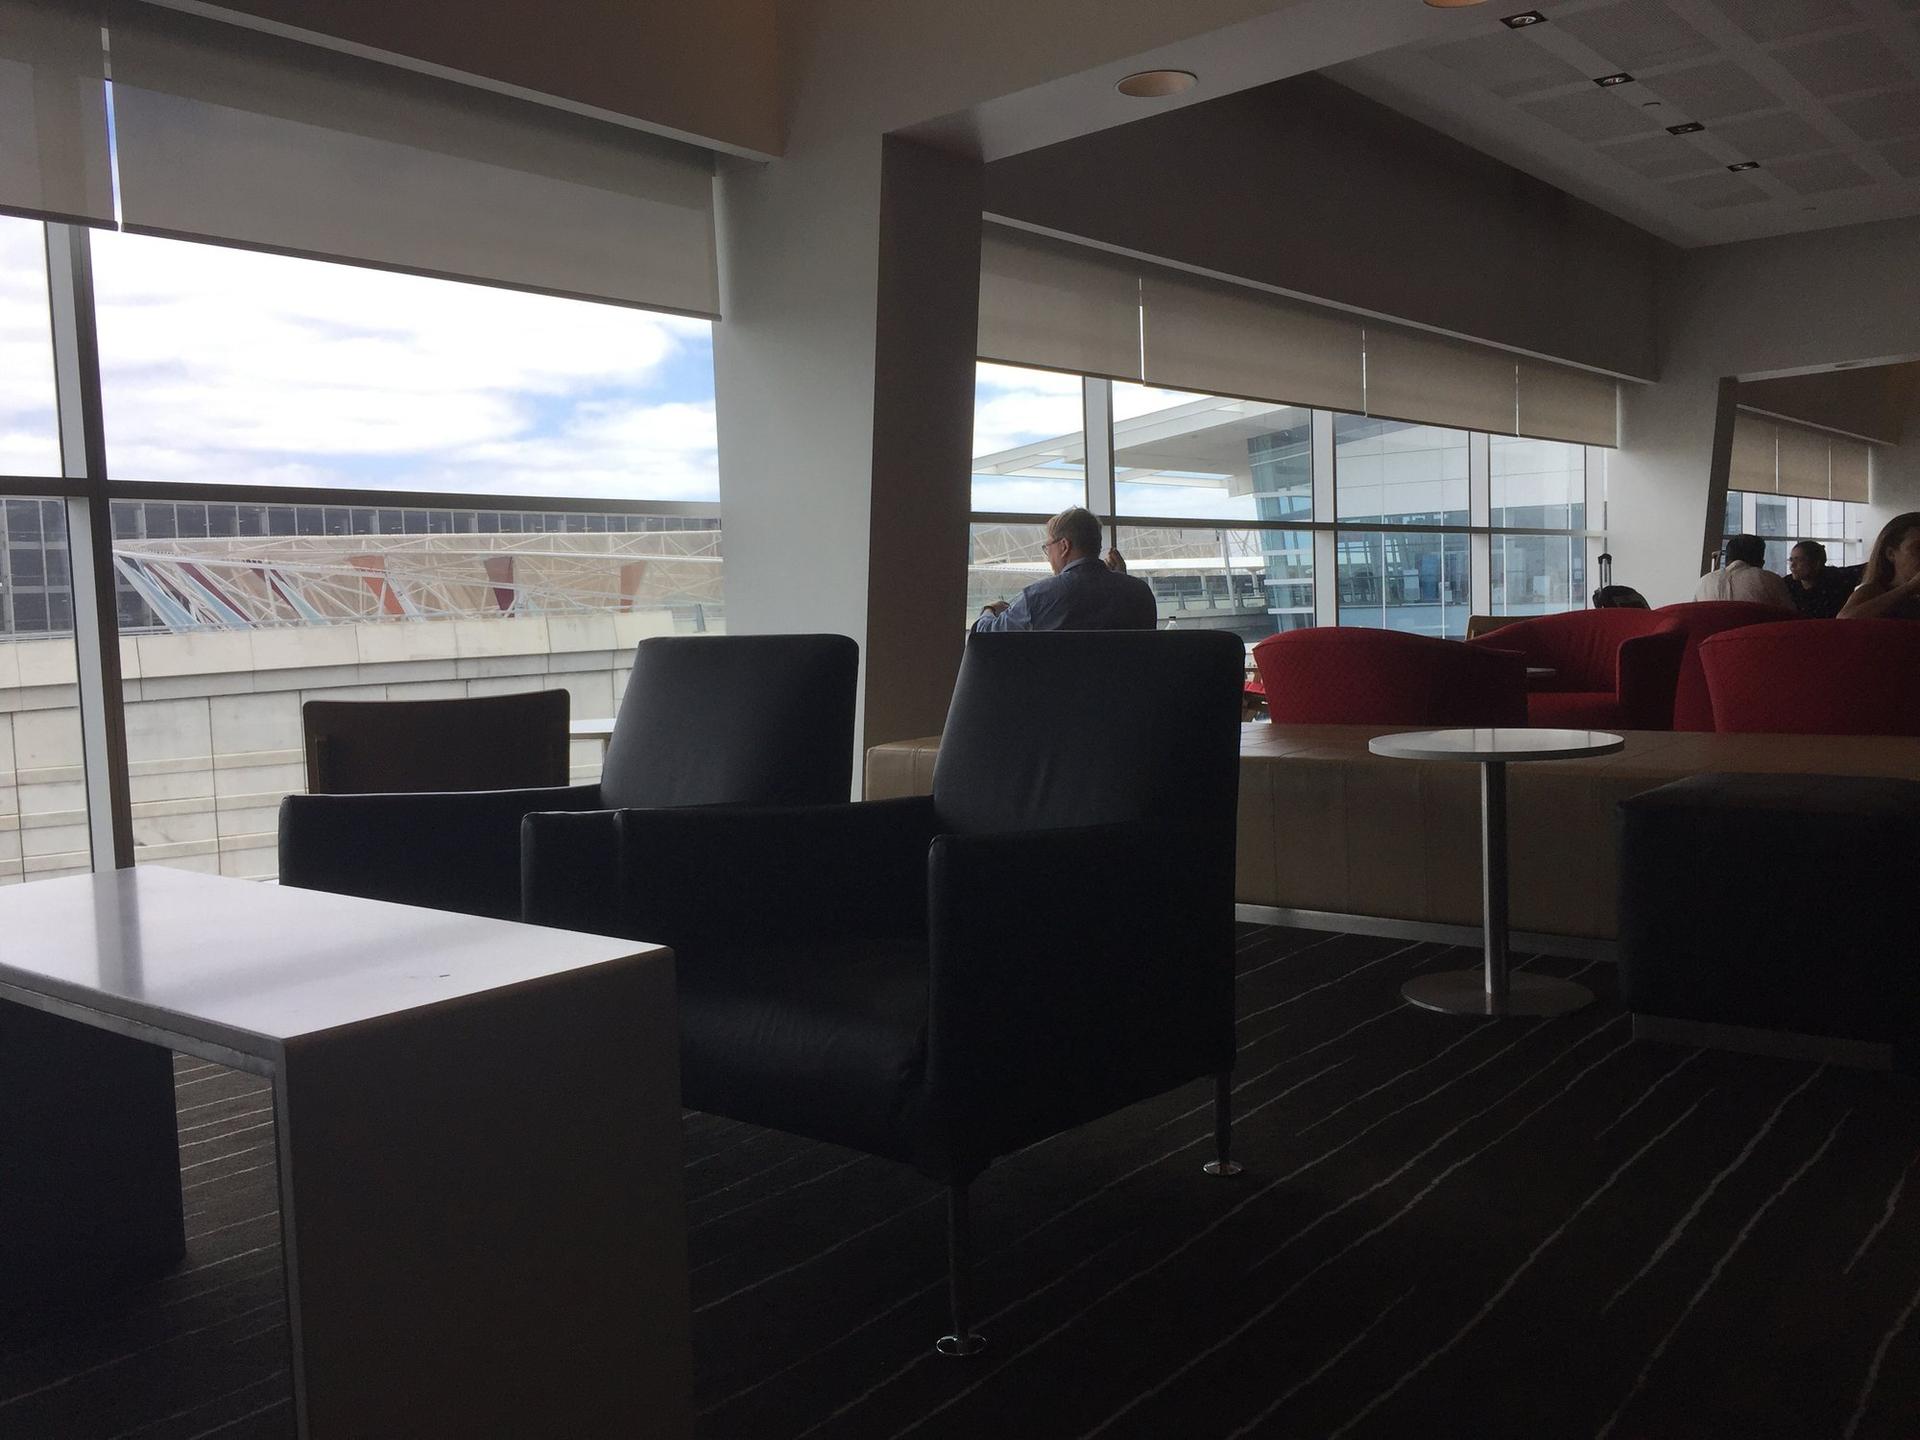 Qantas Club (International Business Lounge) image 5 of 6